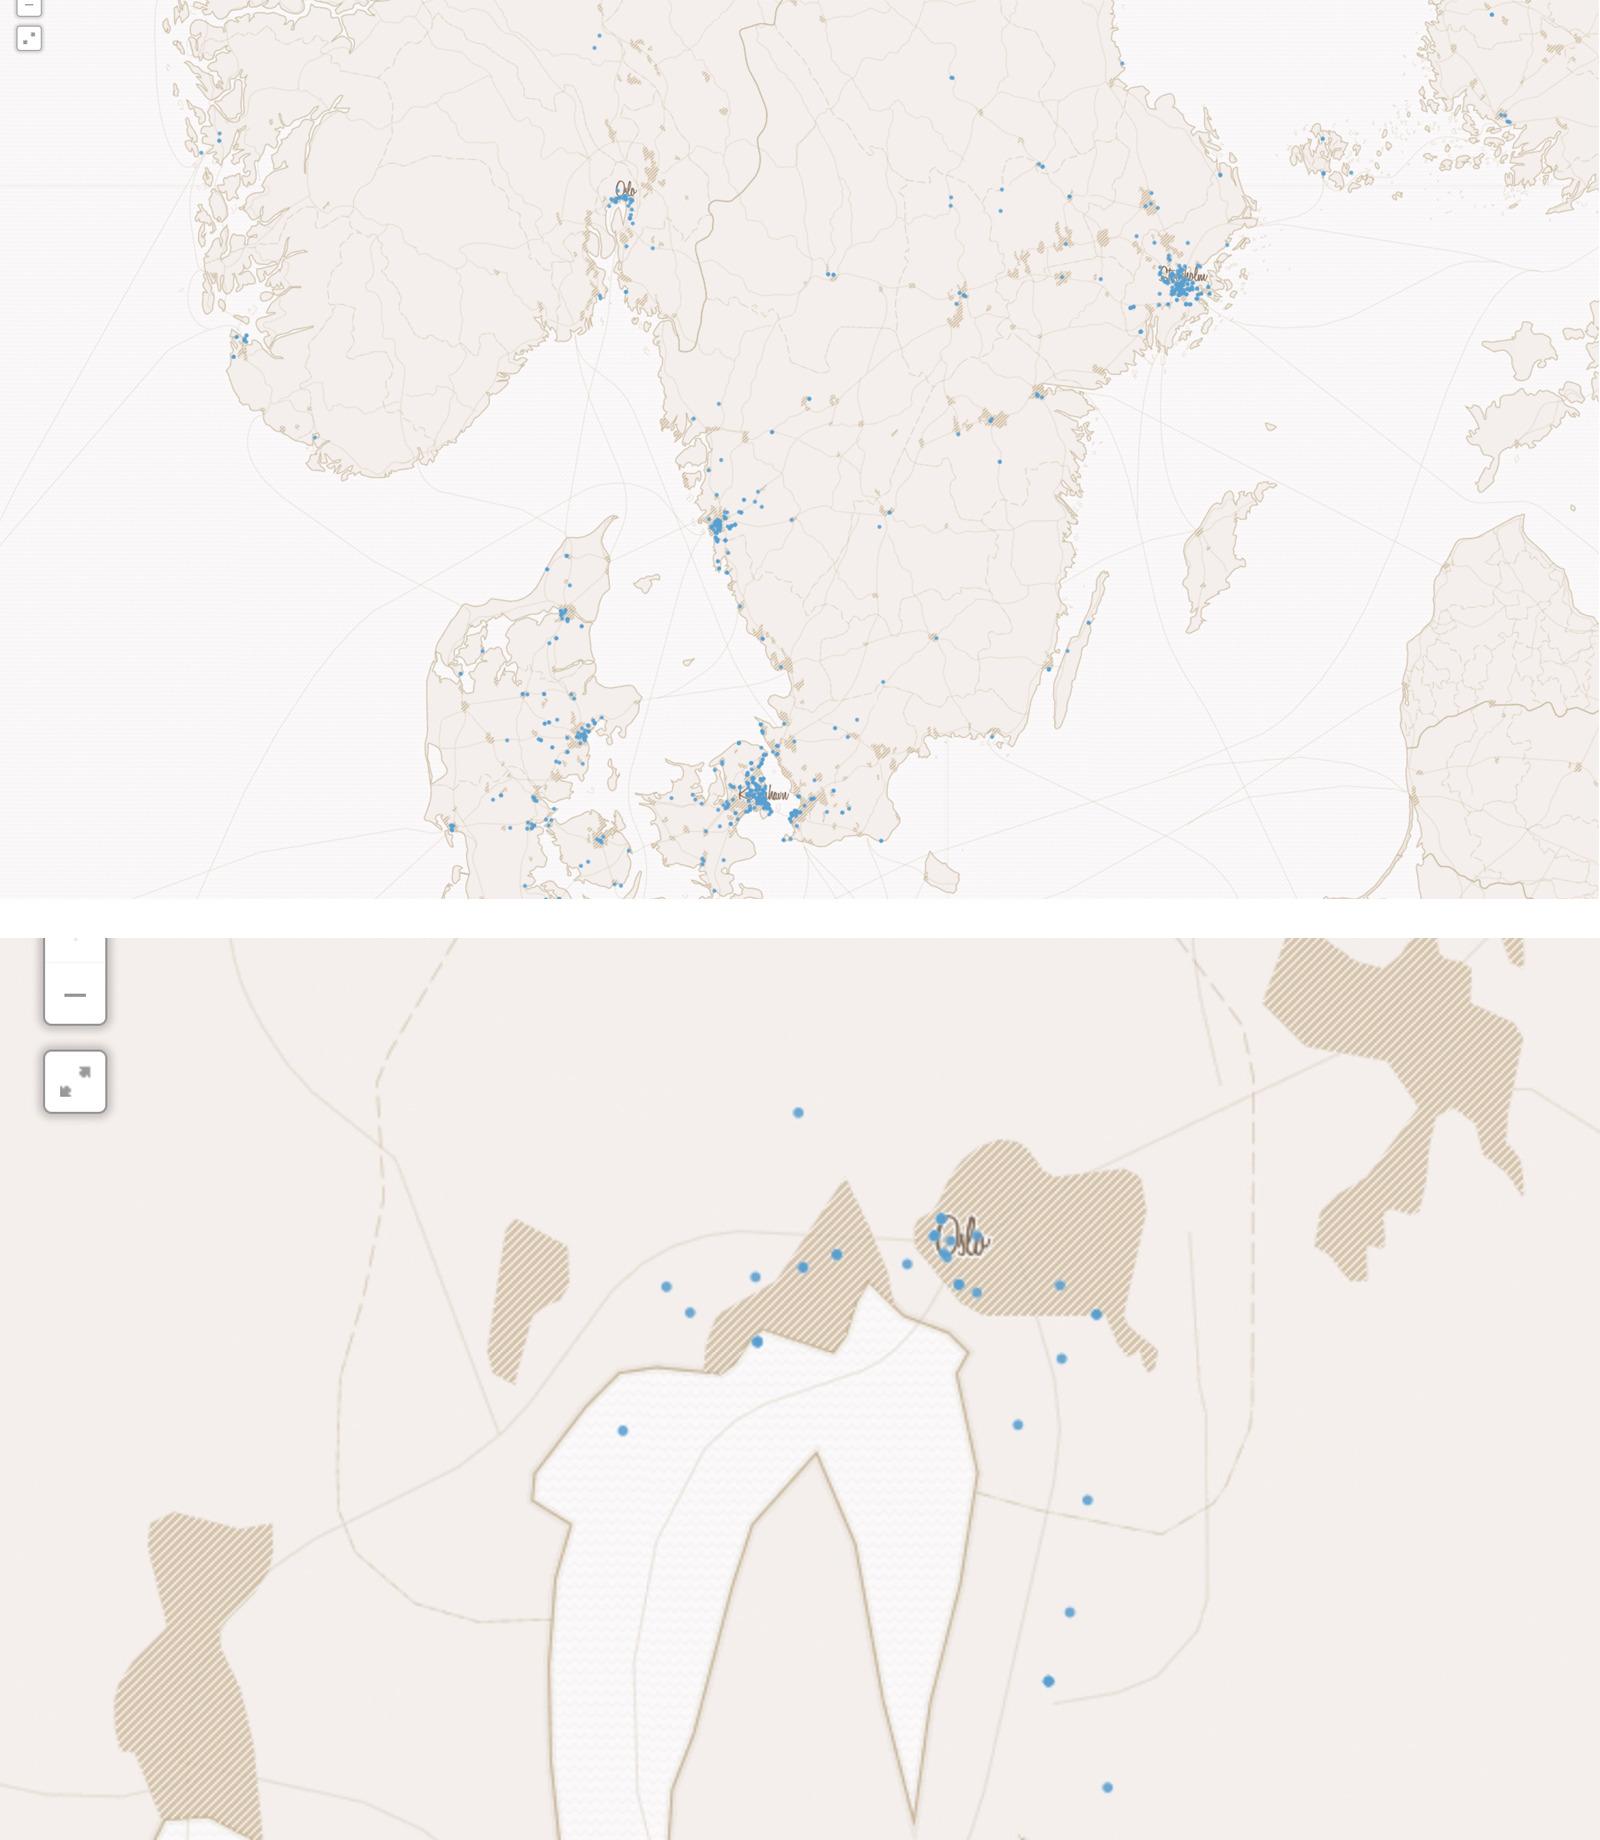 Tile har et kart på hjemmesiden, som viser aktive Tile-brukere verden over. I Norge og Oslo er det litt skralt med brikker så langt. Foto: Torstein Norum Bugge, Tek.no